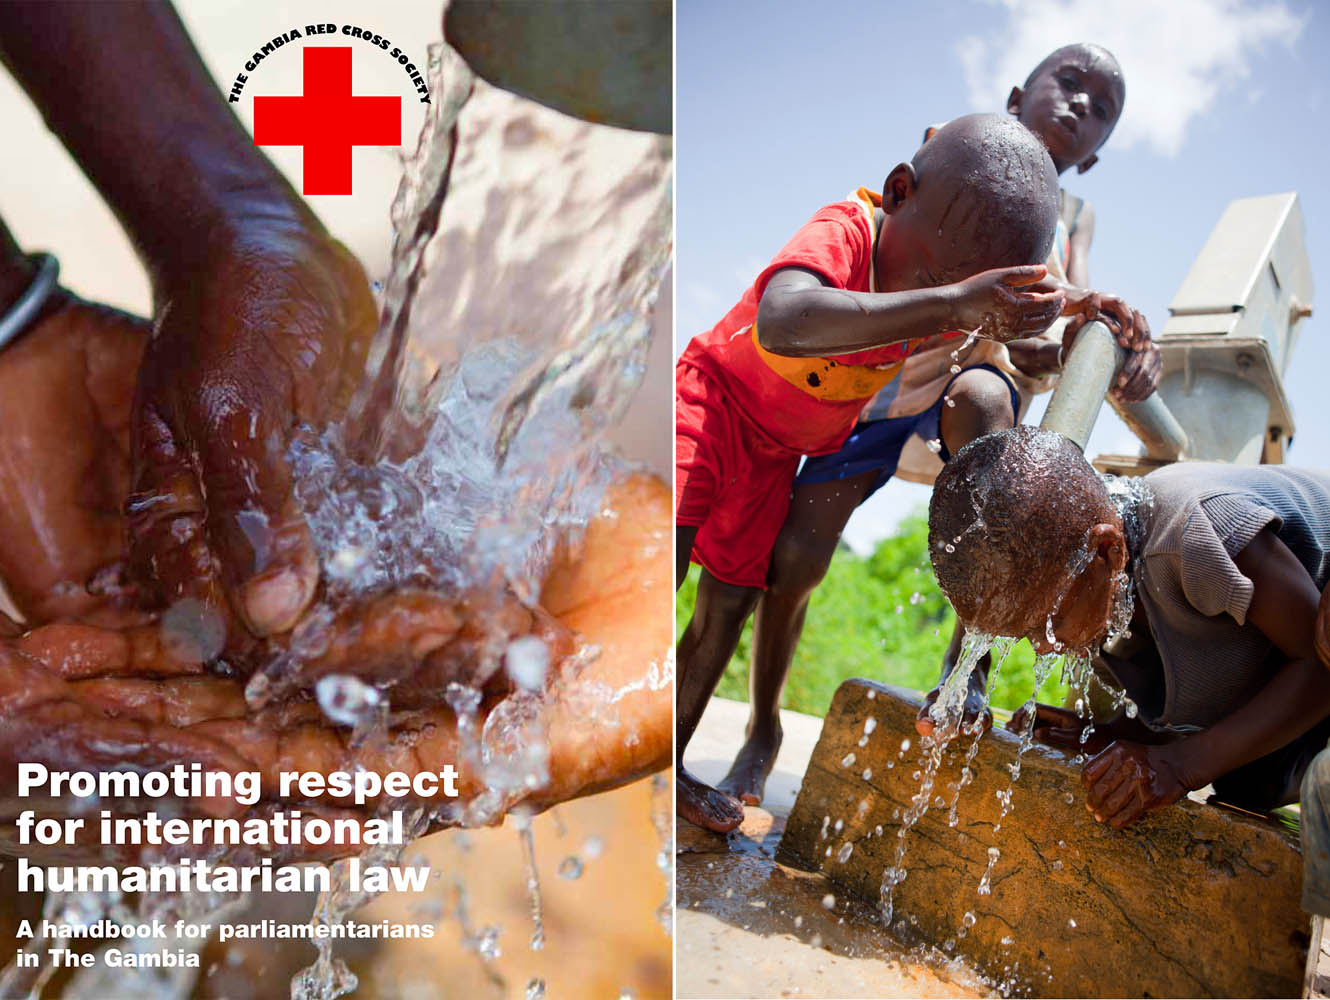 Red Cross Gambia handbook photos